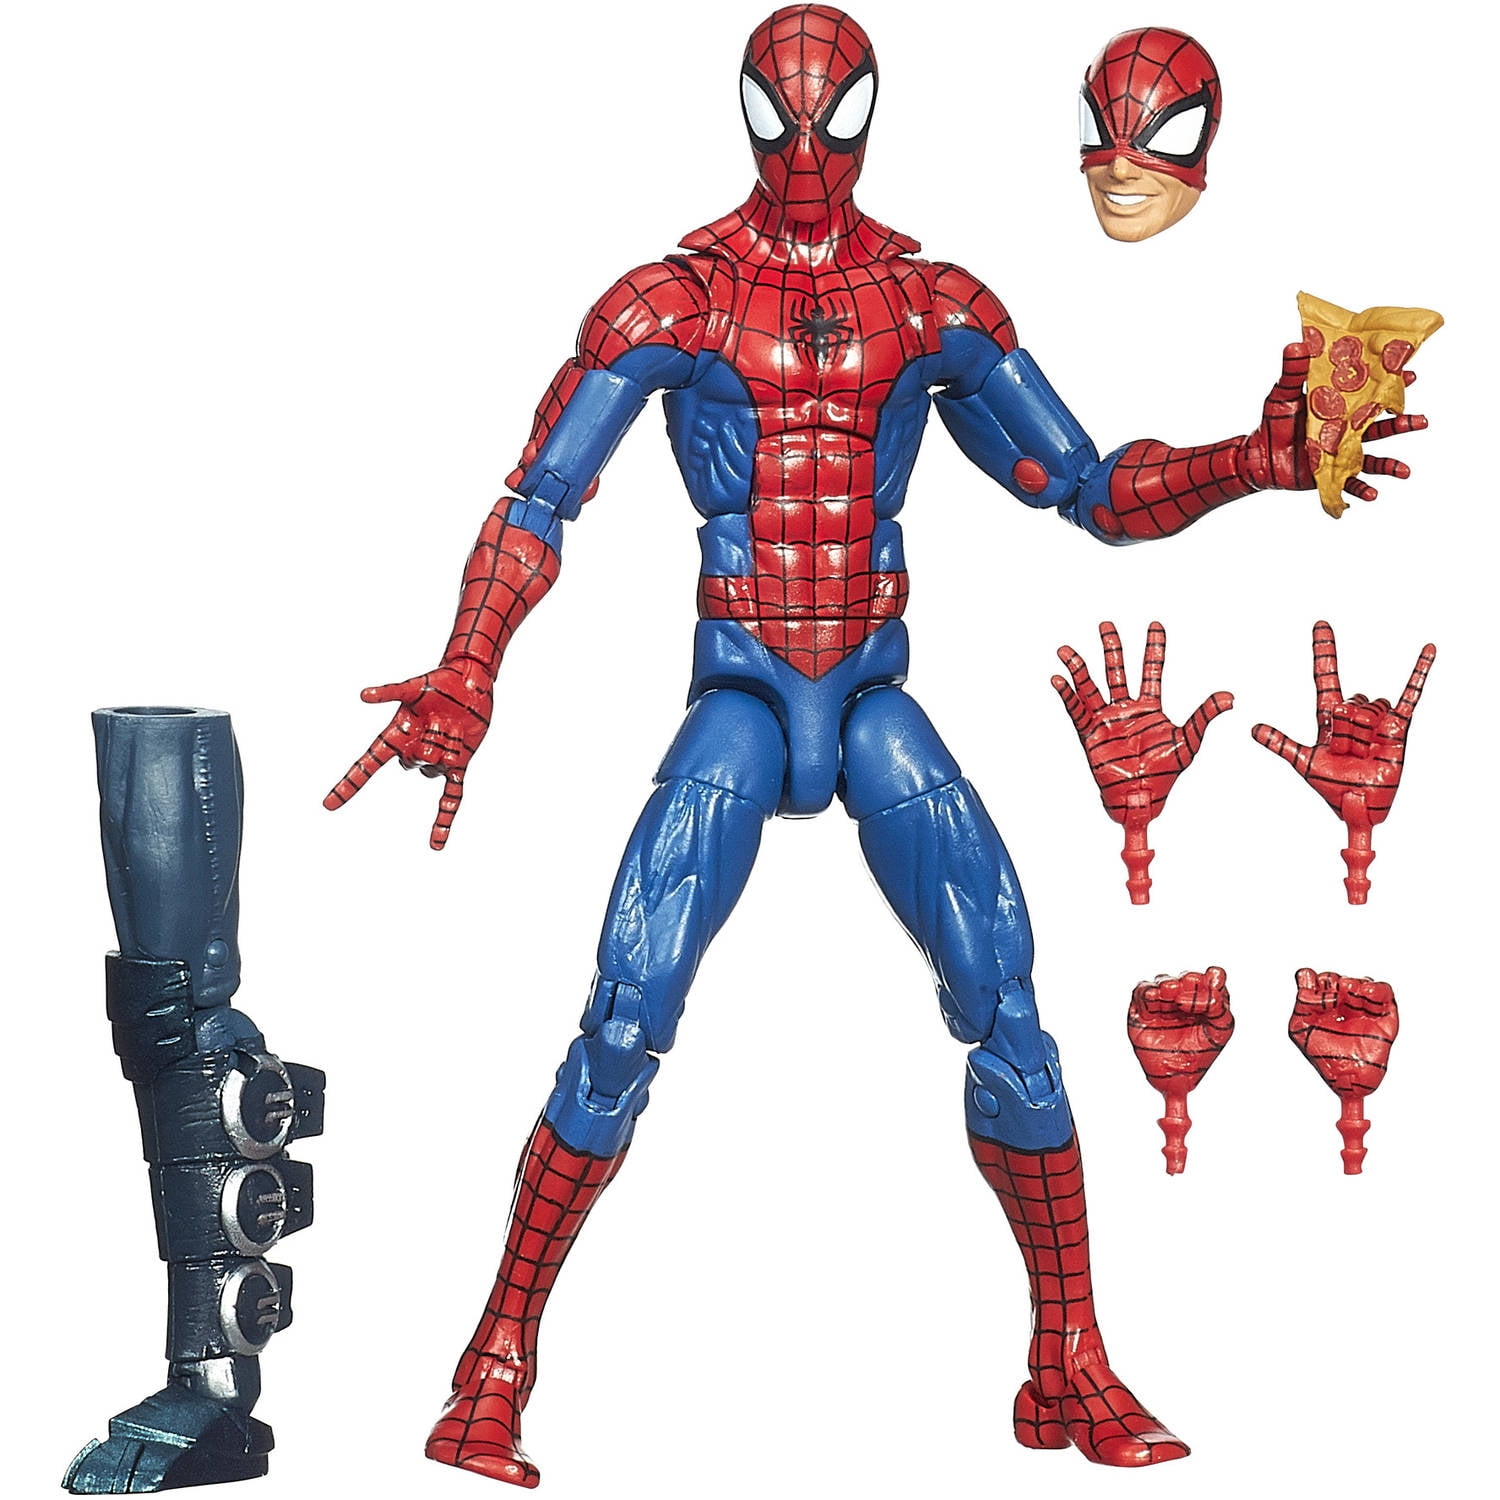 Marvel Legends Infinite Series The Spider-man Figure Hasbro 2013 for sale online 